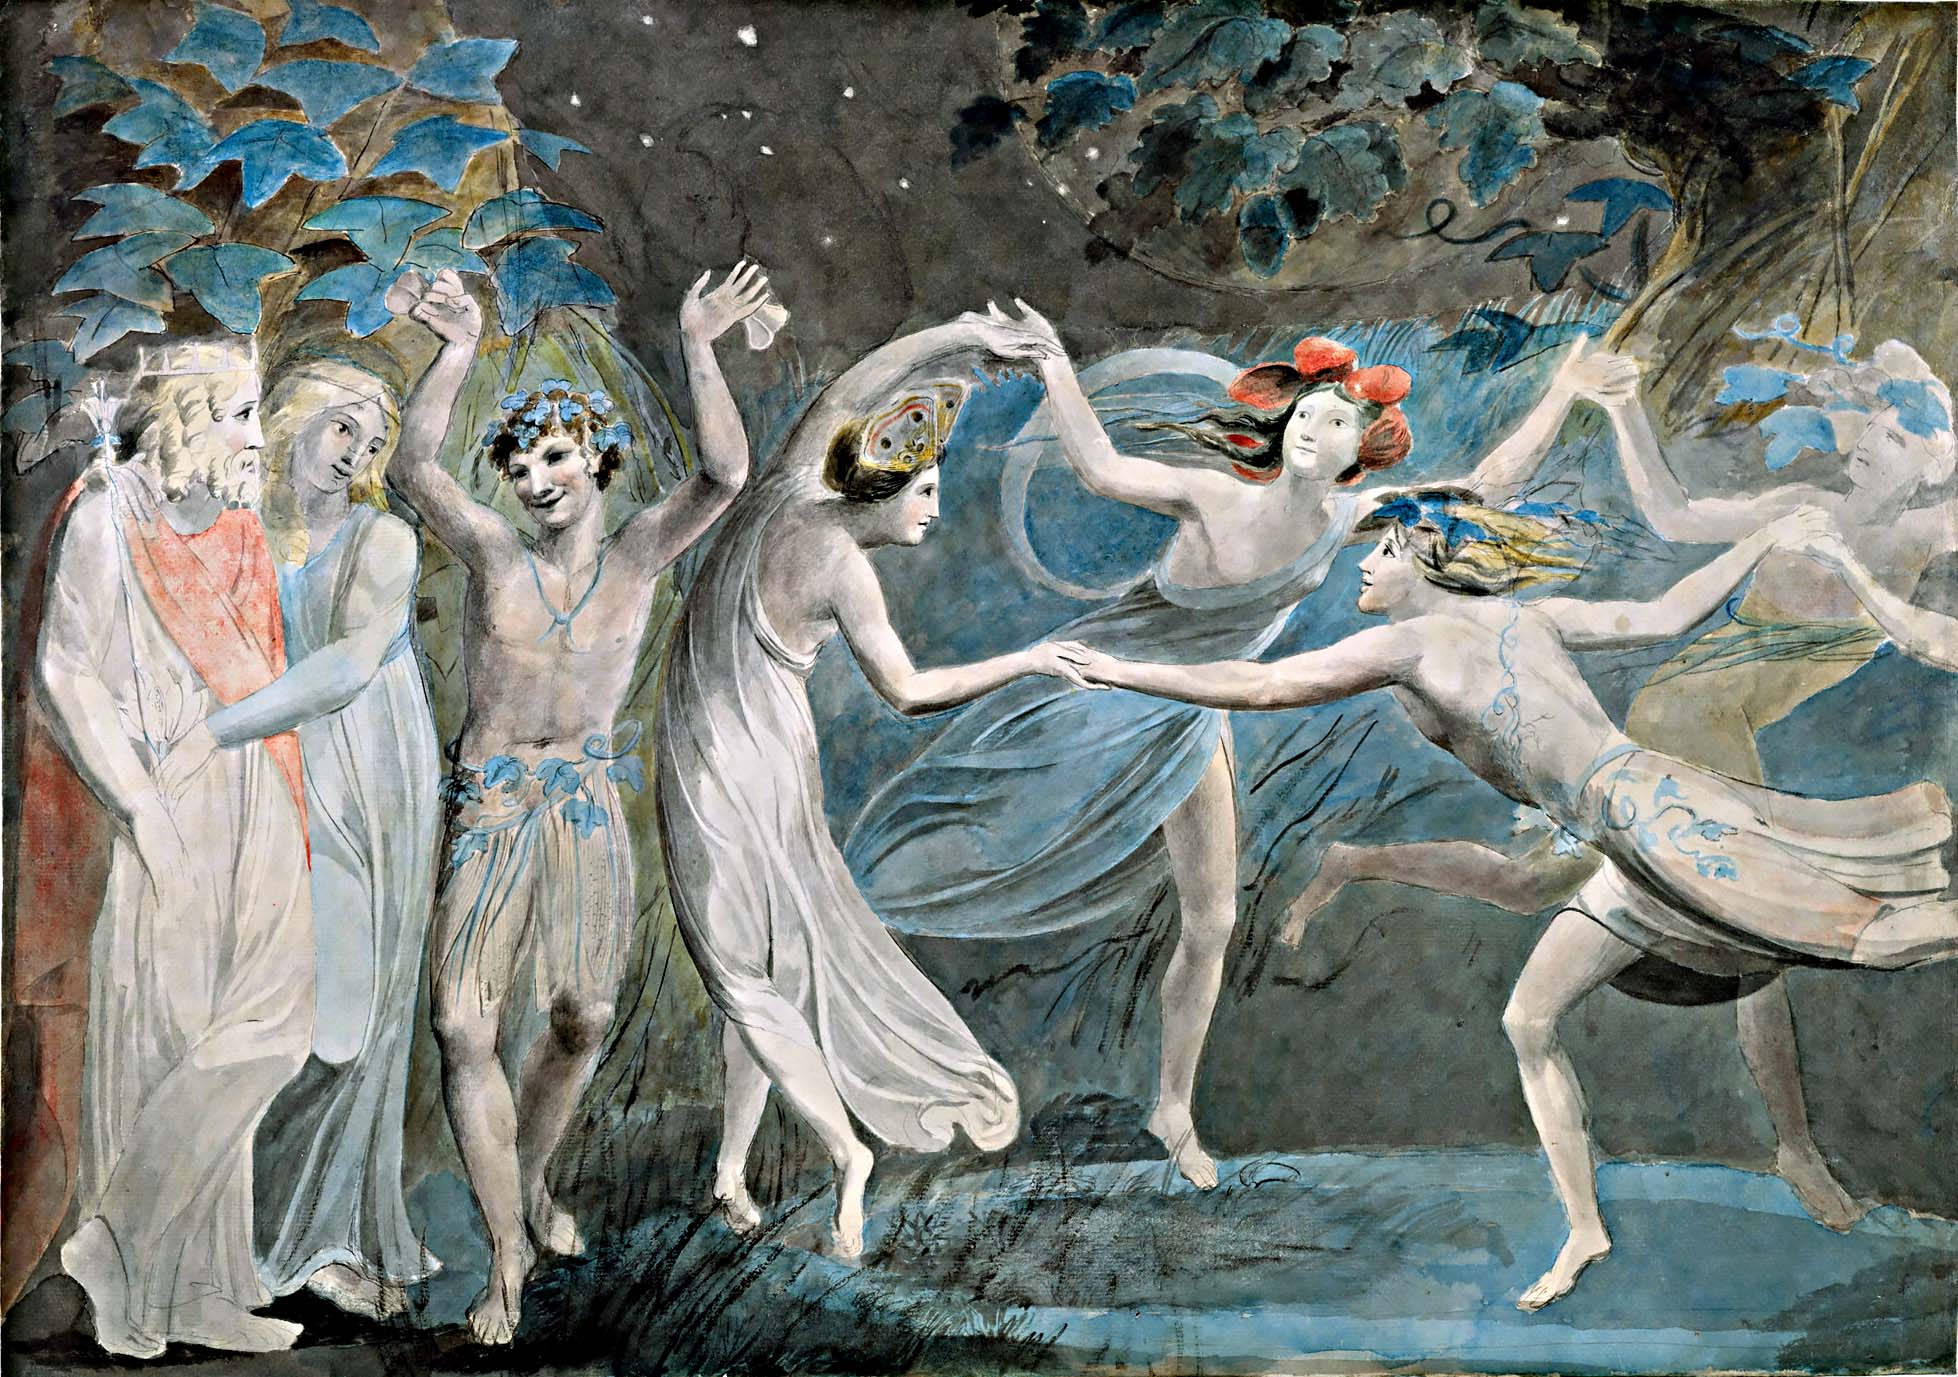 Oberon Titania and Puck with Fairies Dancing. William Blake